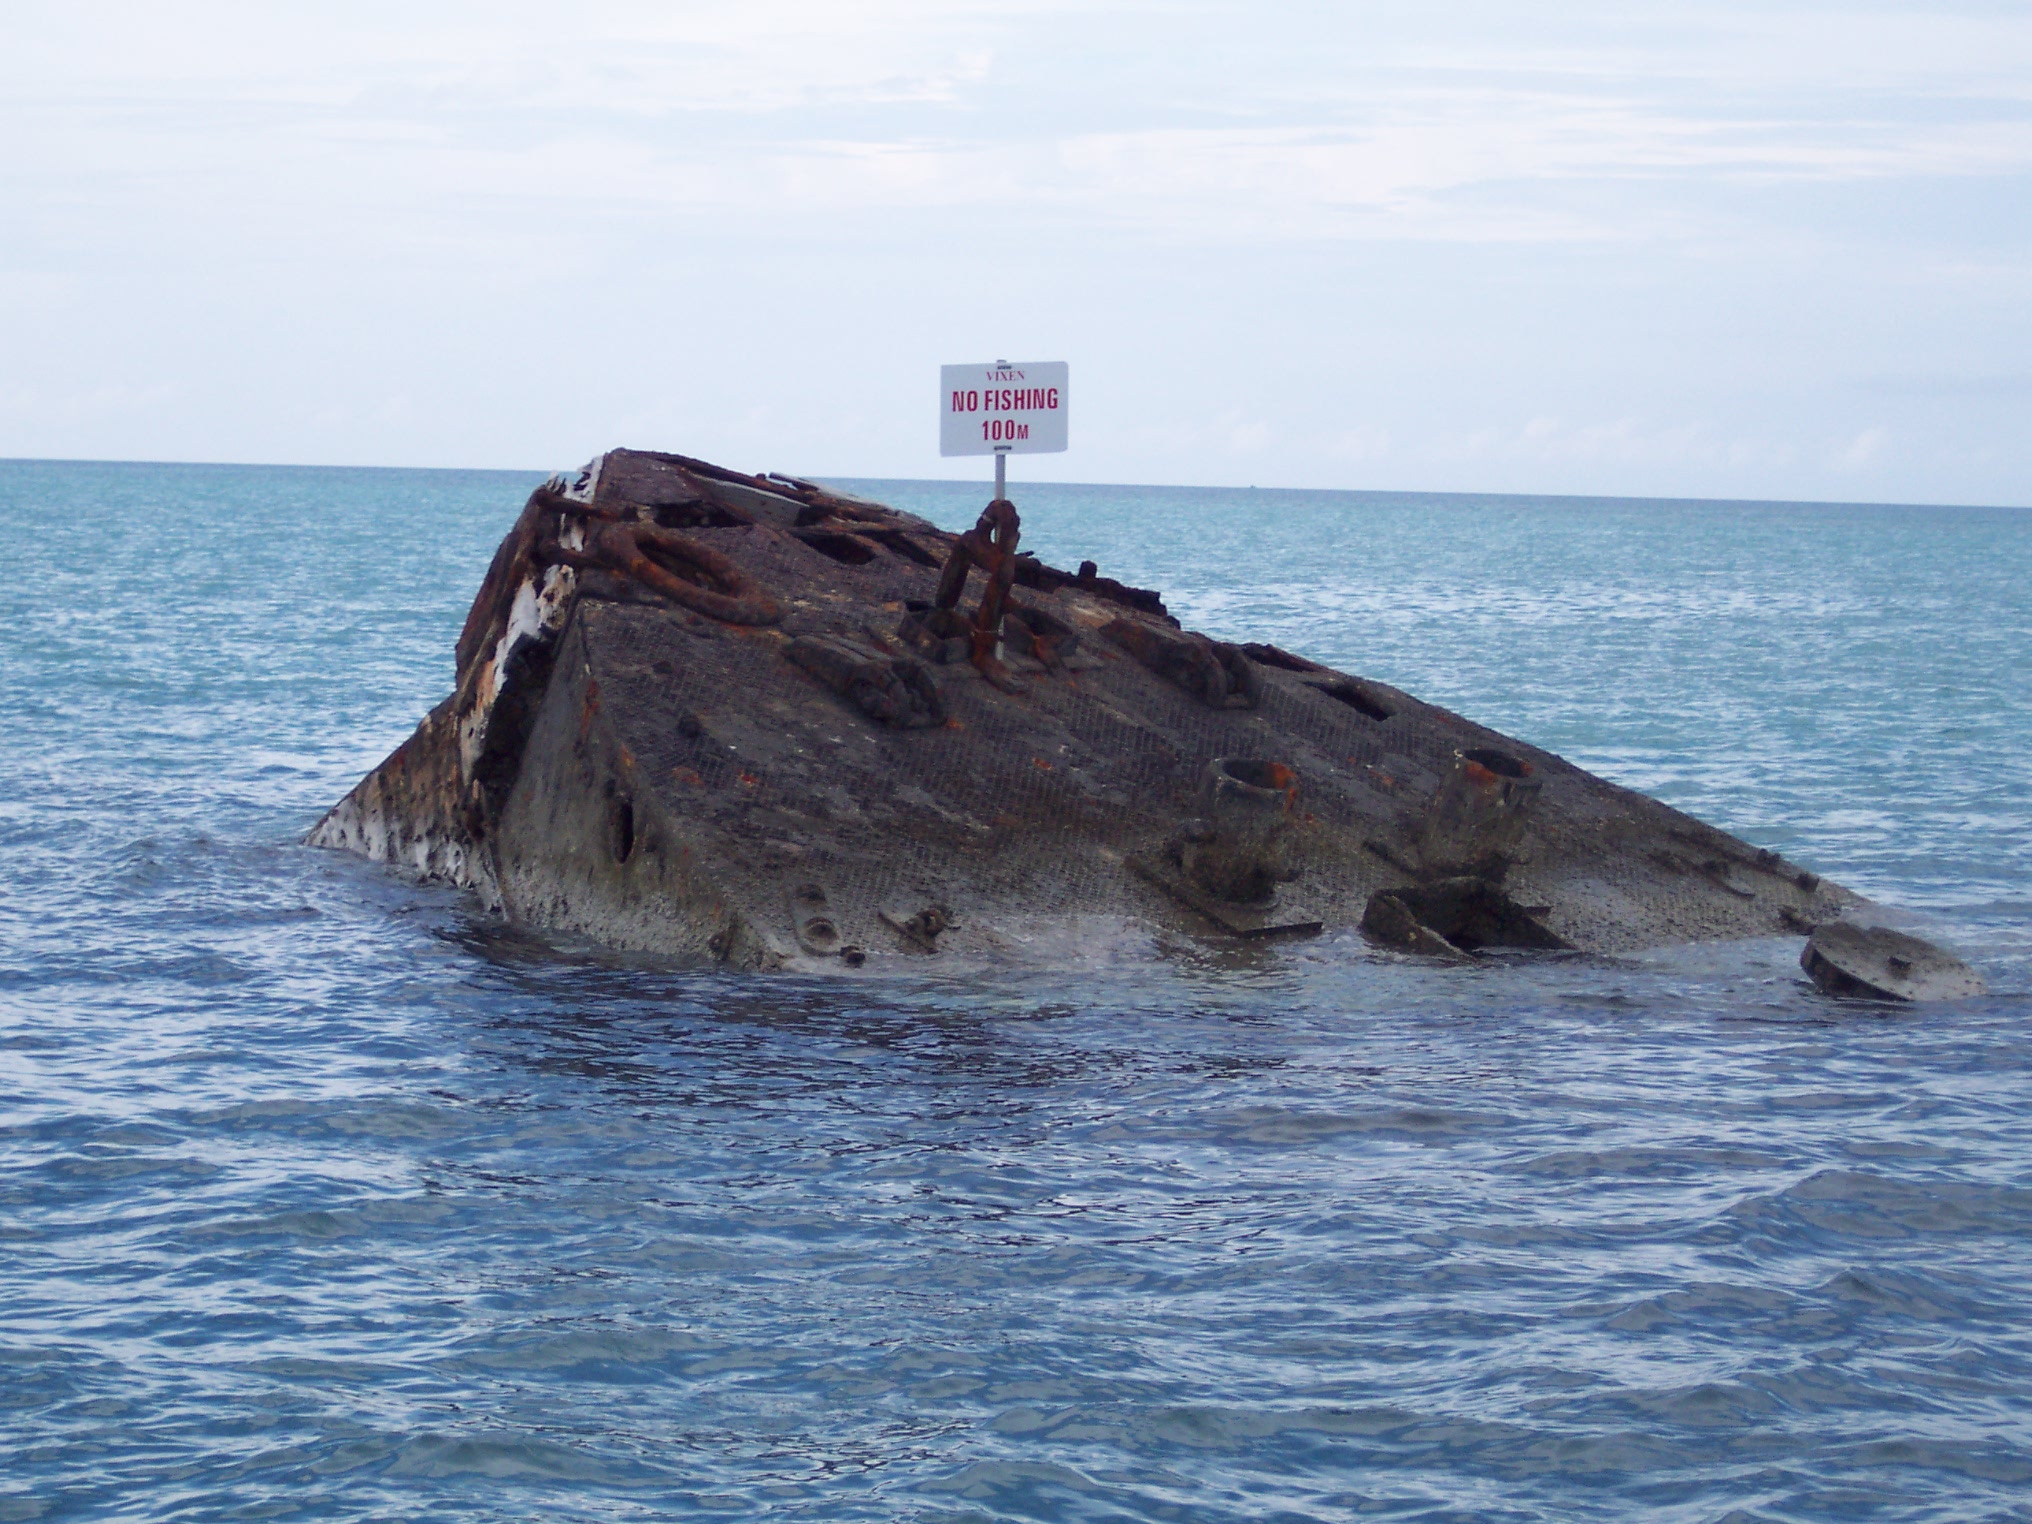 Wreck of the Vixen - Off Coast of Bermuda